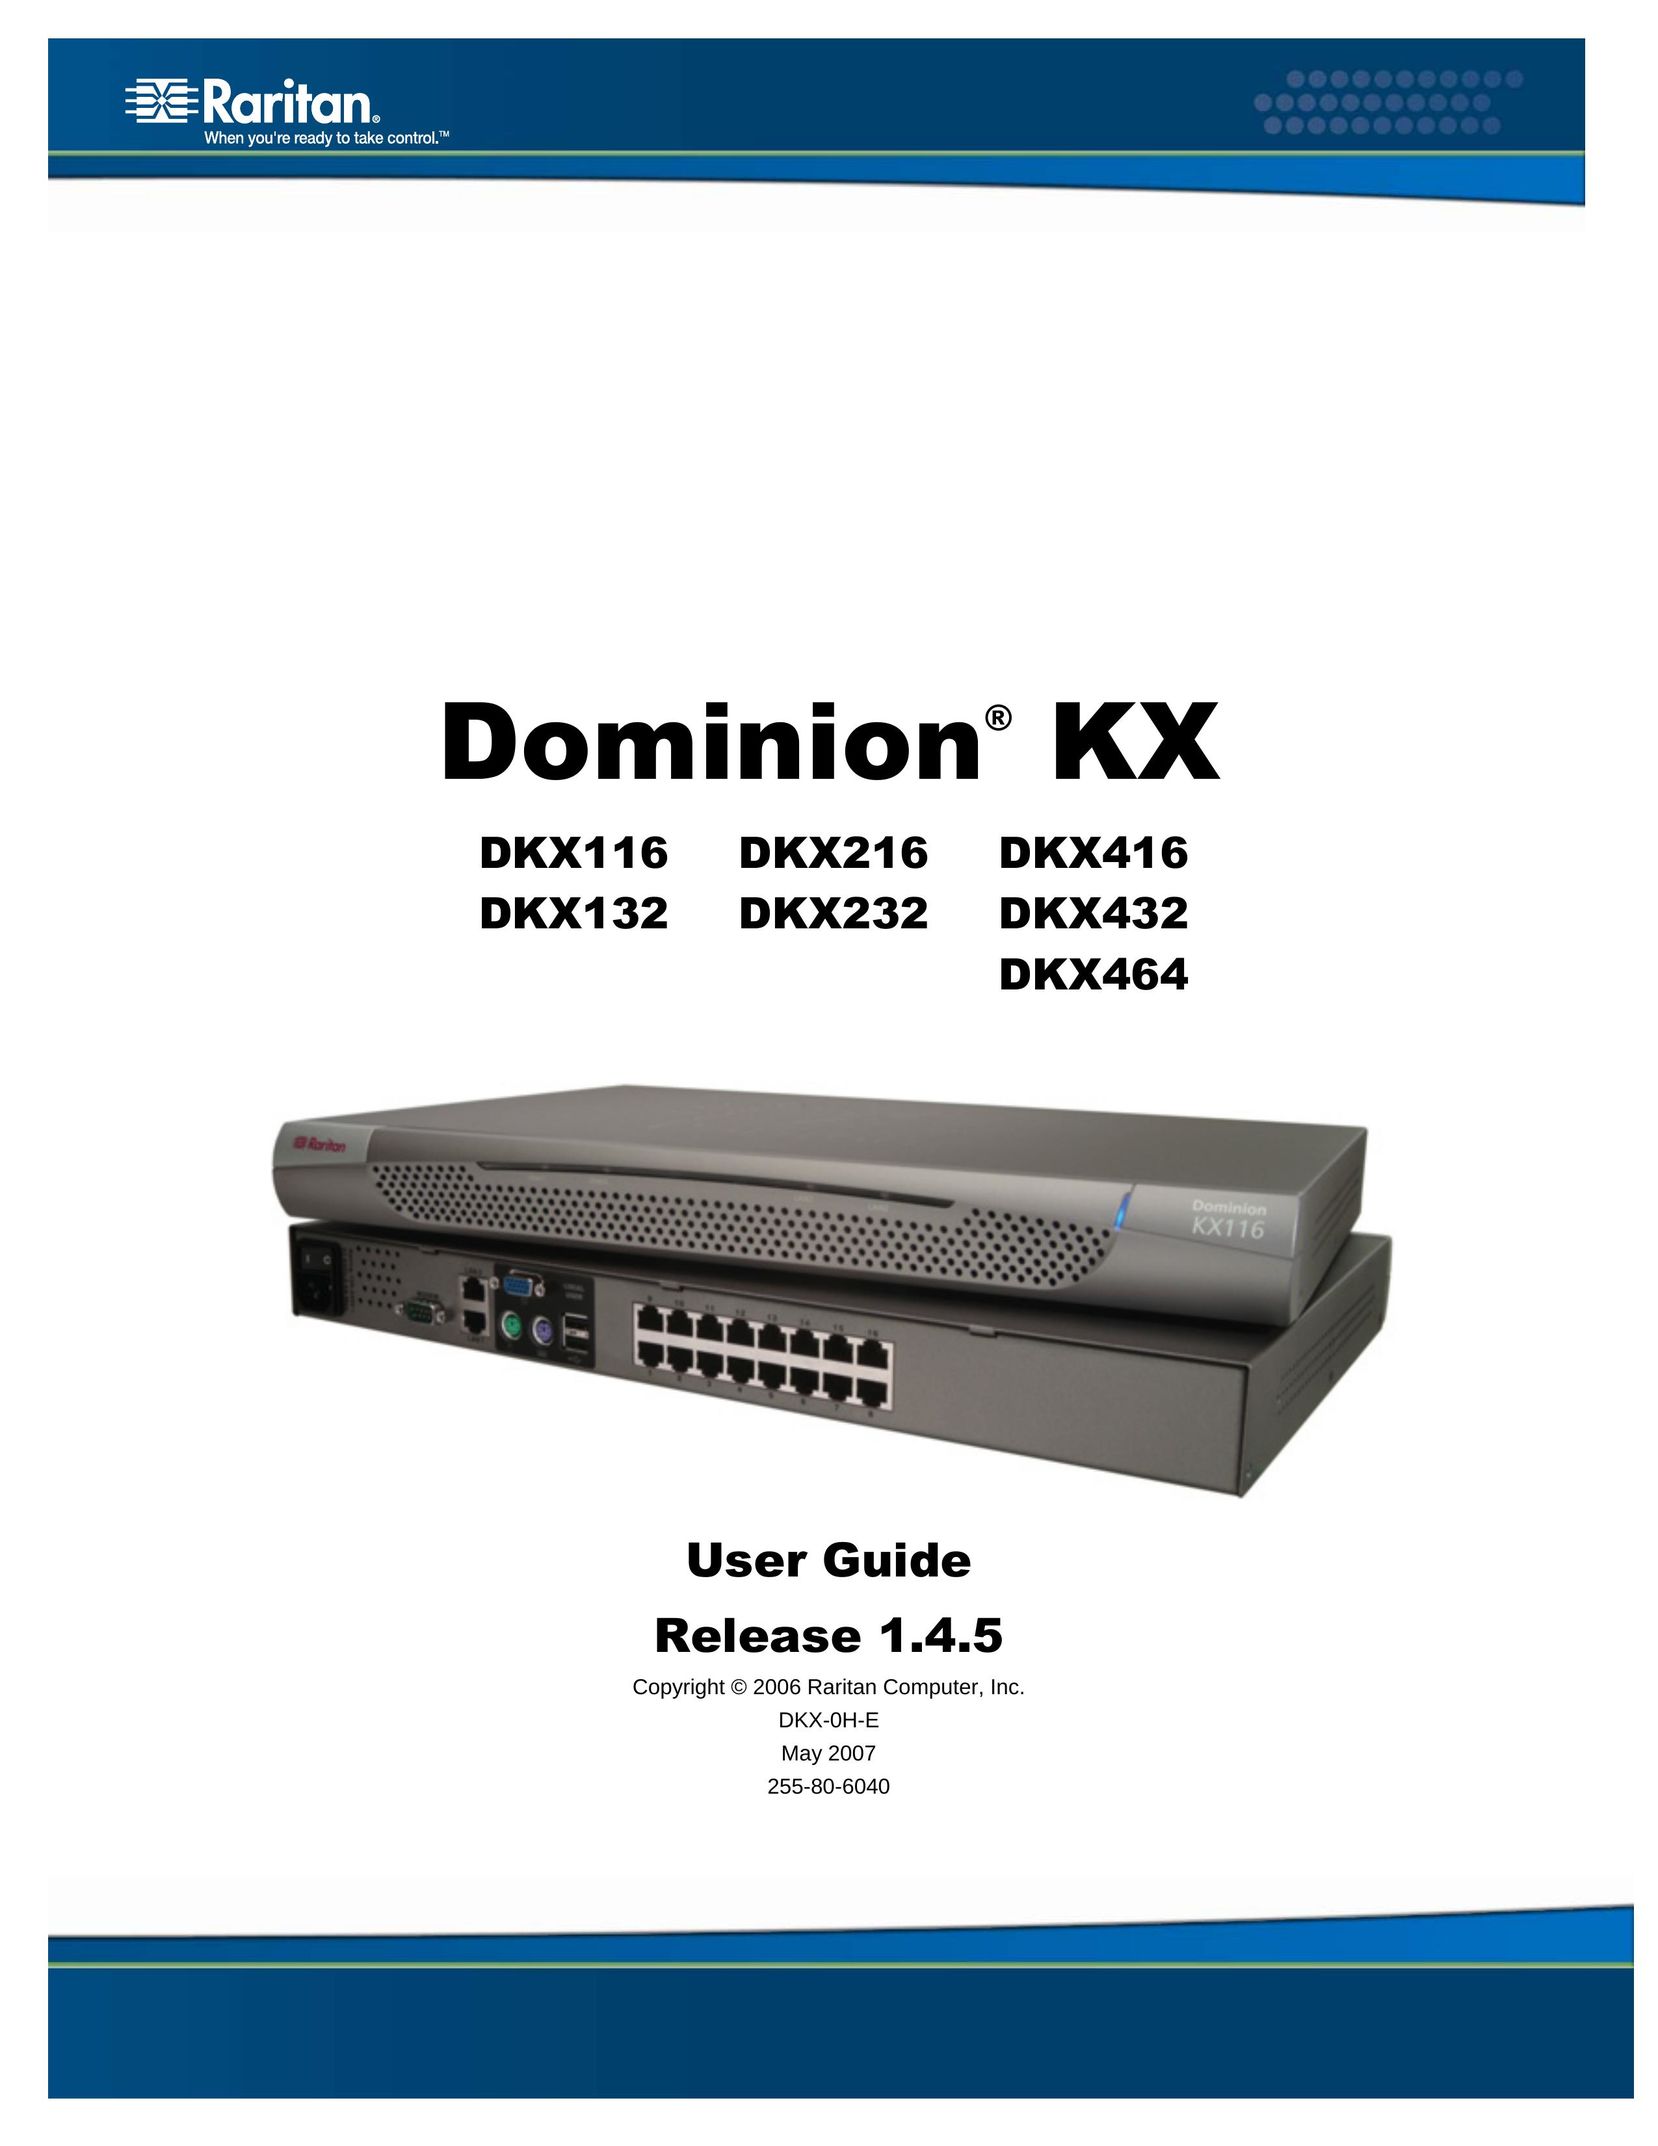 Raritan Computer DKX416 Network Router User Manual